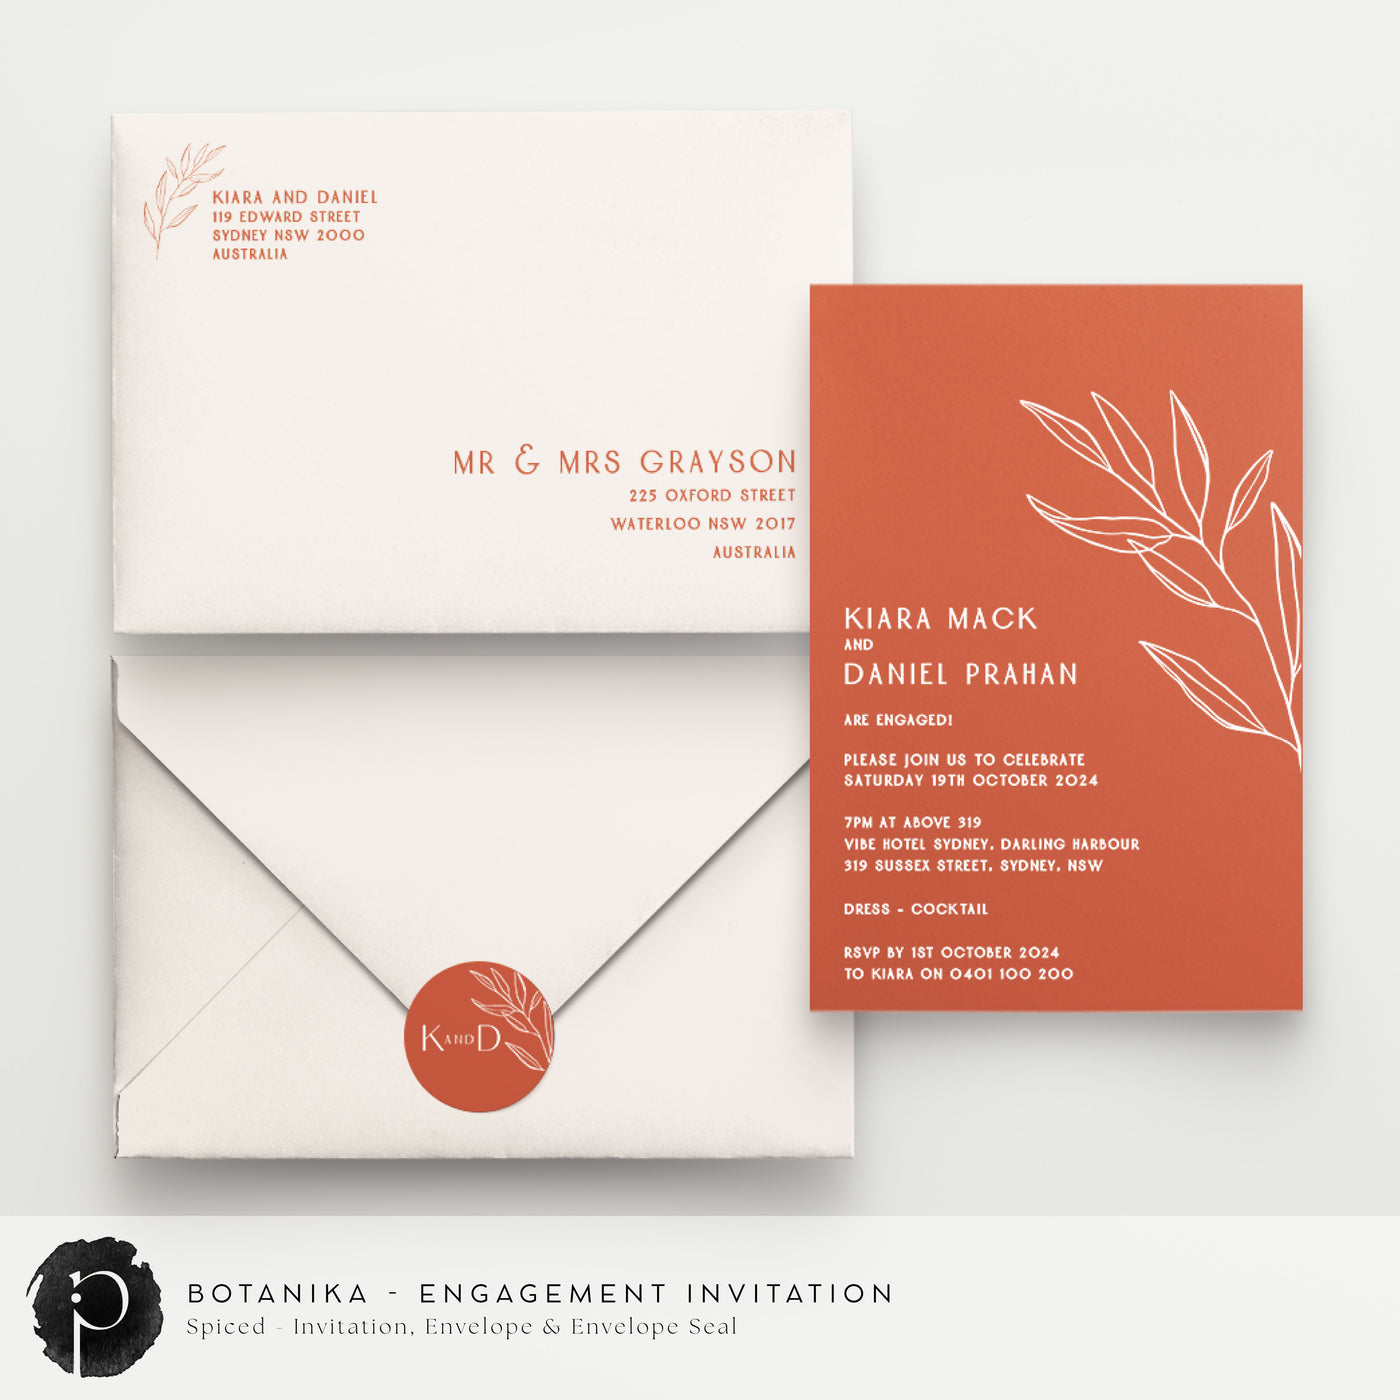 Botanika - Engagement Invitations